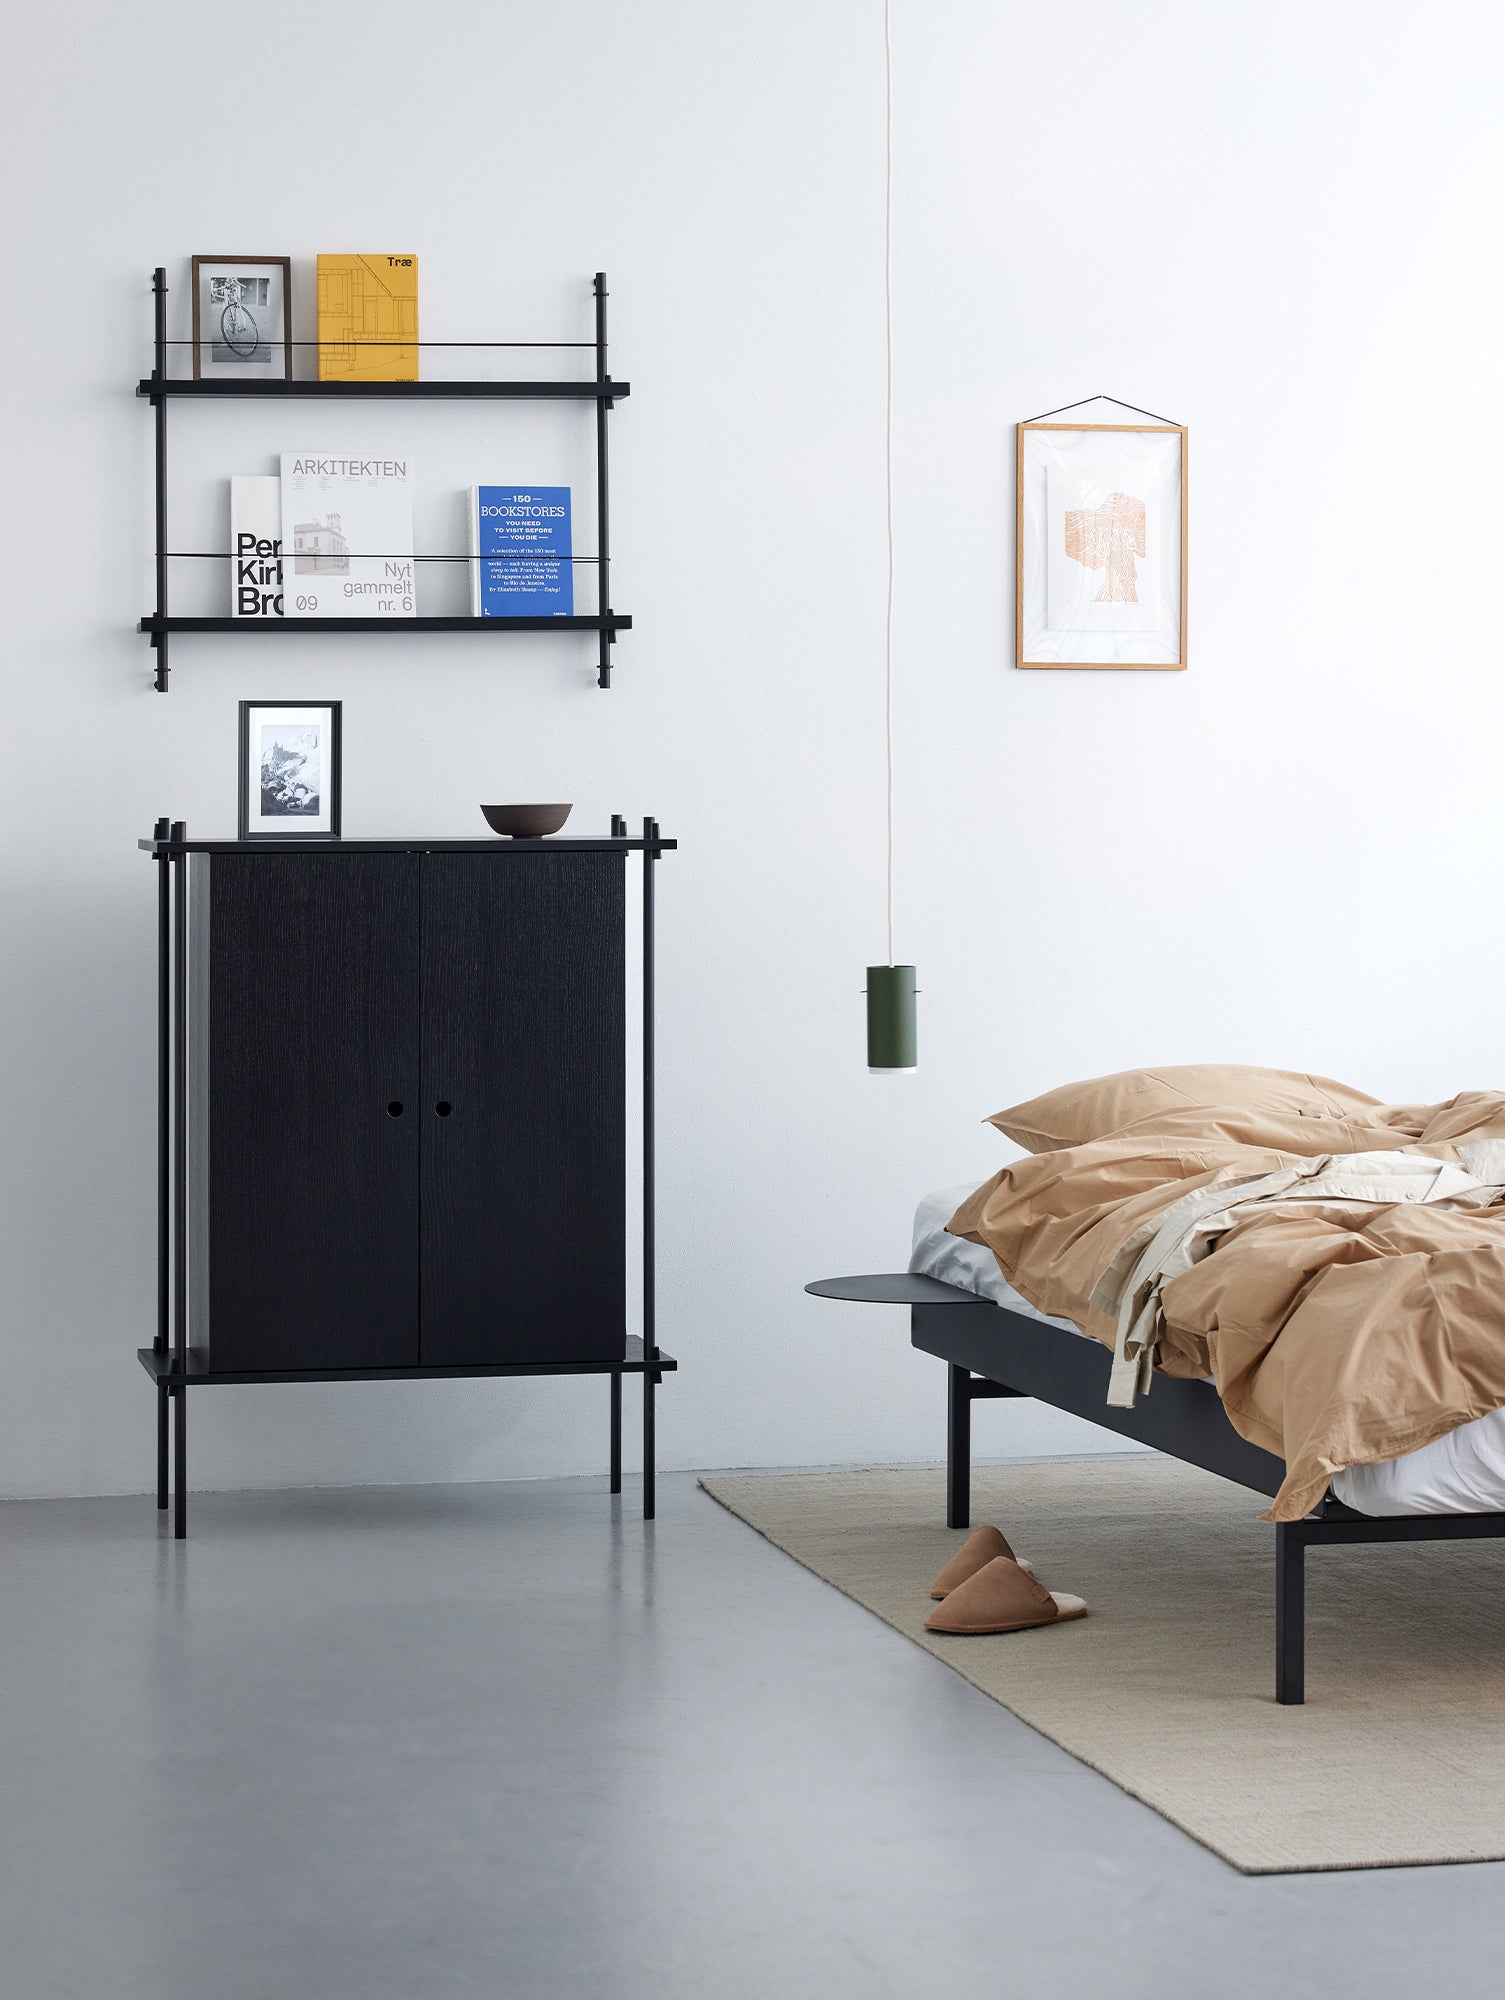 Bed 90 - 180 cm (High) by Moebe- Black